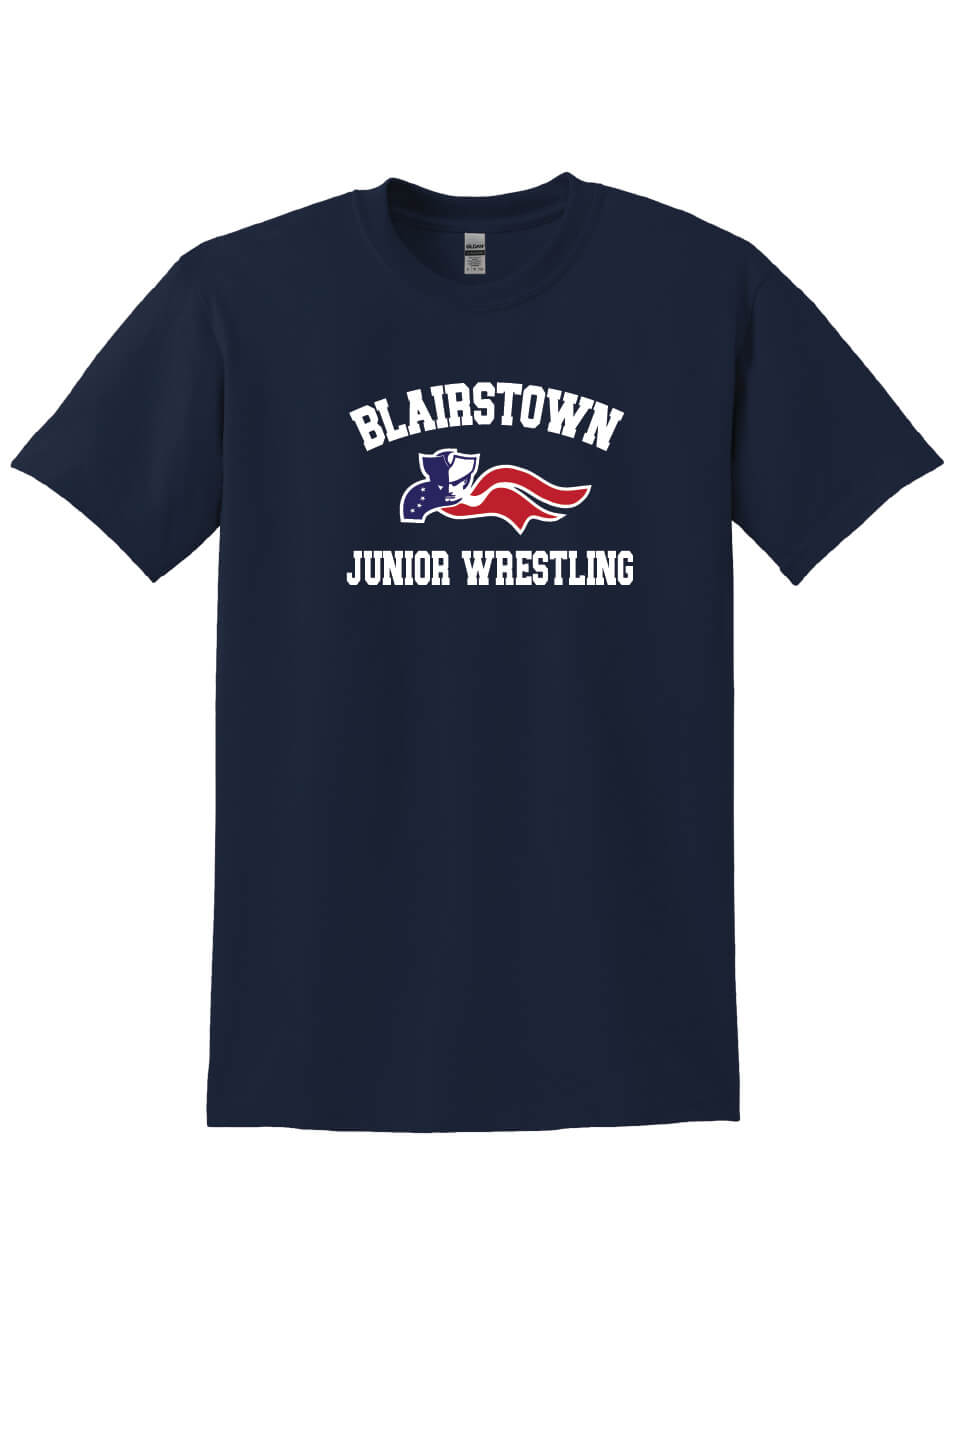 Blairstown JR Wrestling Short Sleeve T-Shirt navy